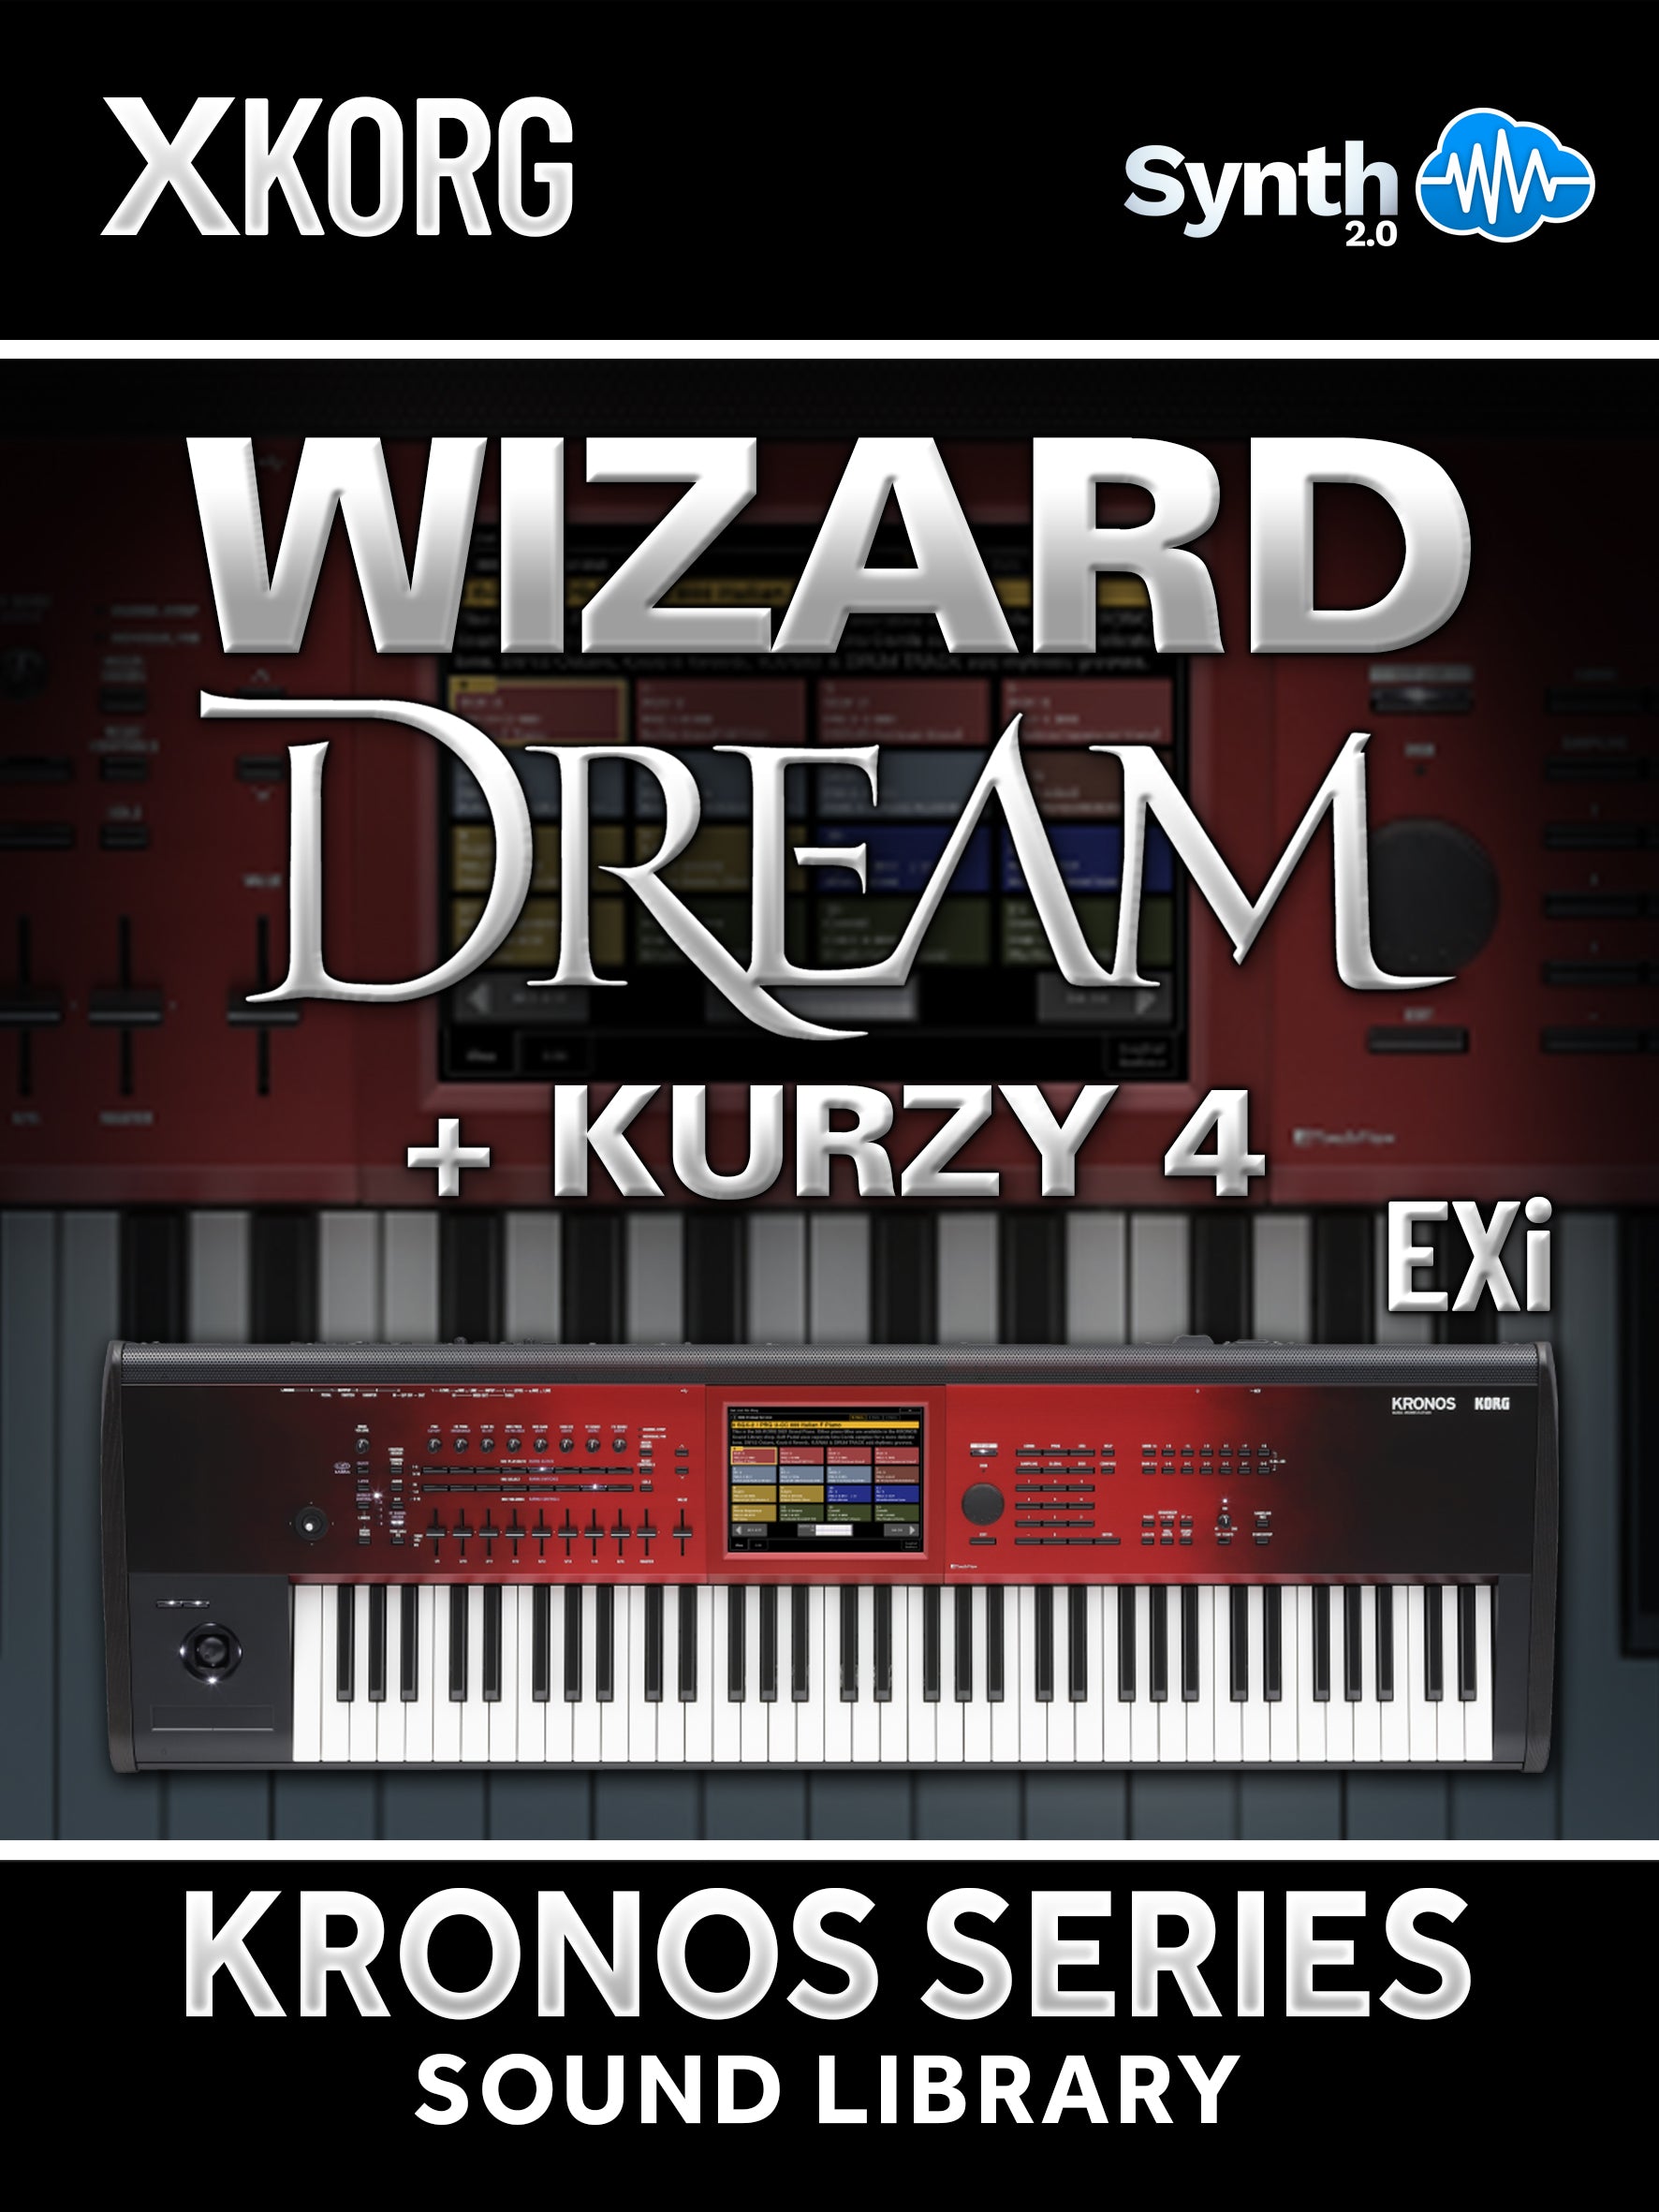 SSX001 - Wizard Dream EXi + Kurzy 4 - Korg Kronos Series ( 50 presets )